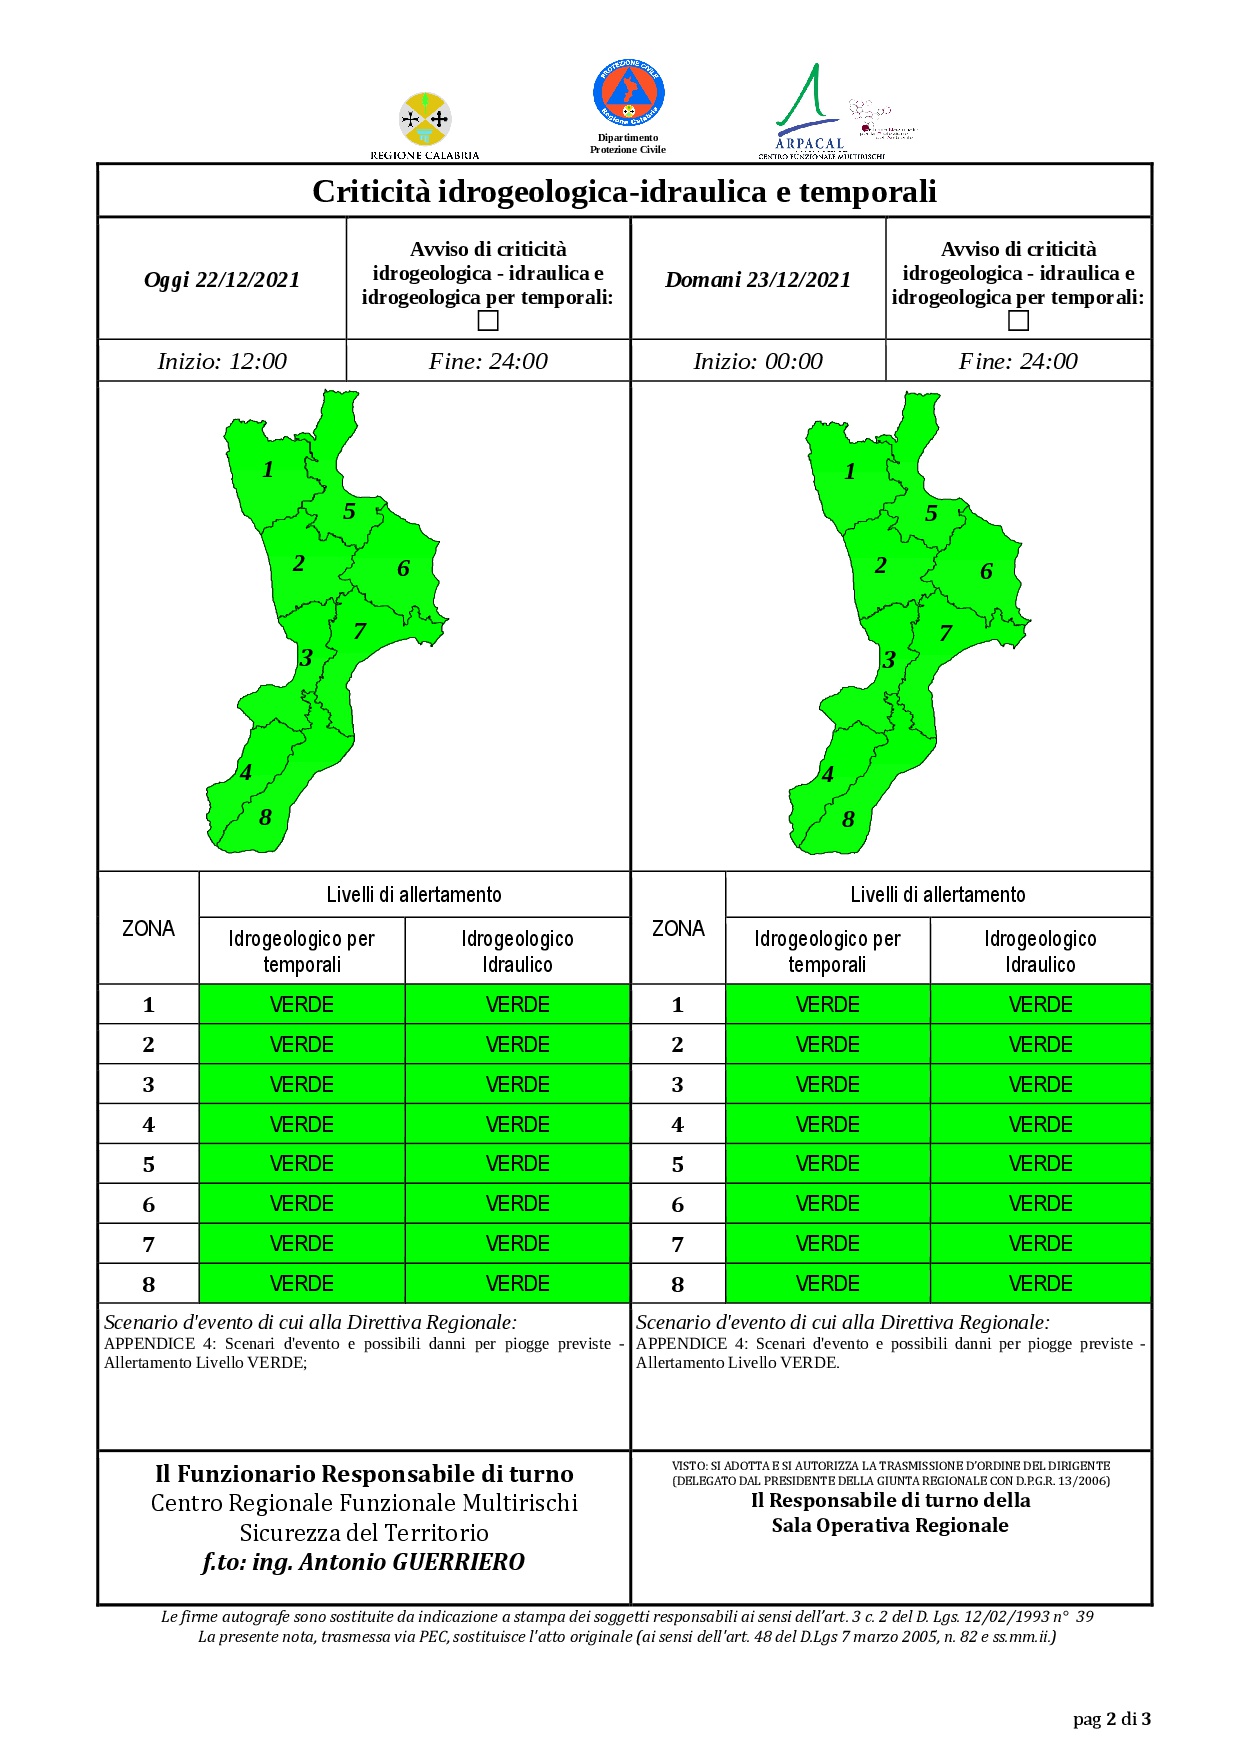 Criticità idrogeologica-idraulica e temporali in Calabria 22-12-2021